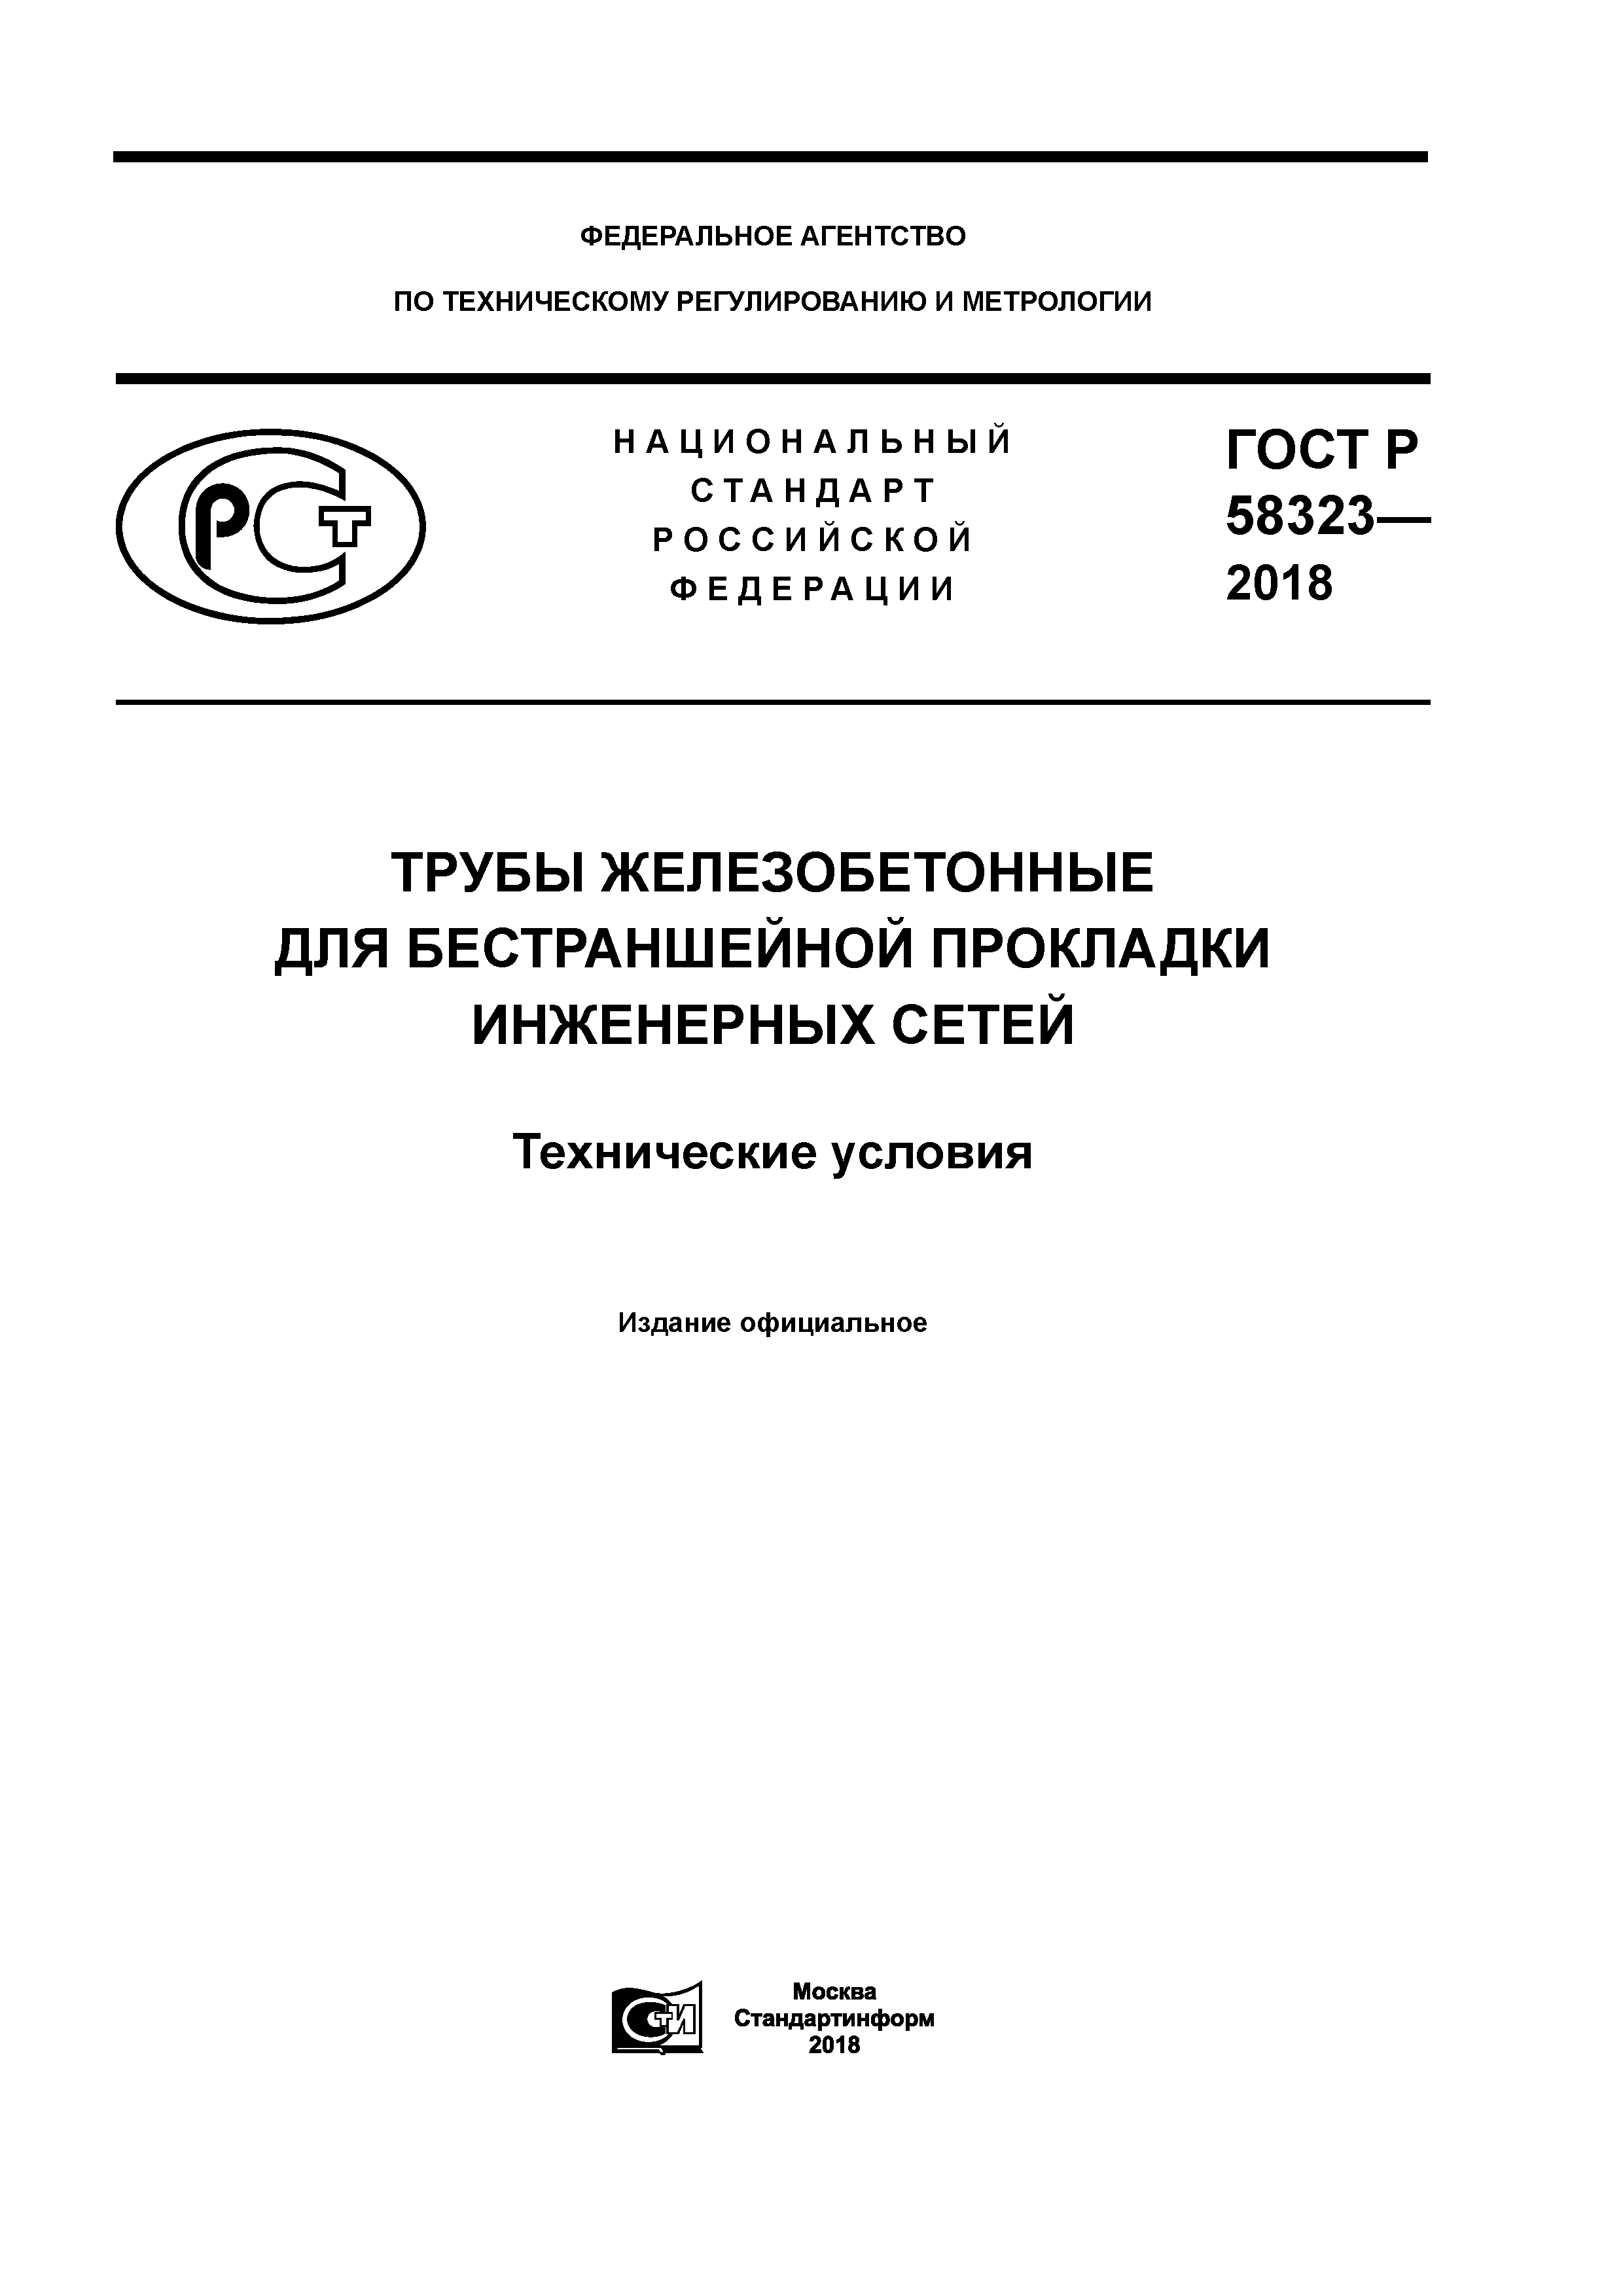 ГОСТ Р 58323-2018